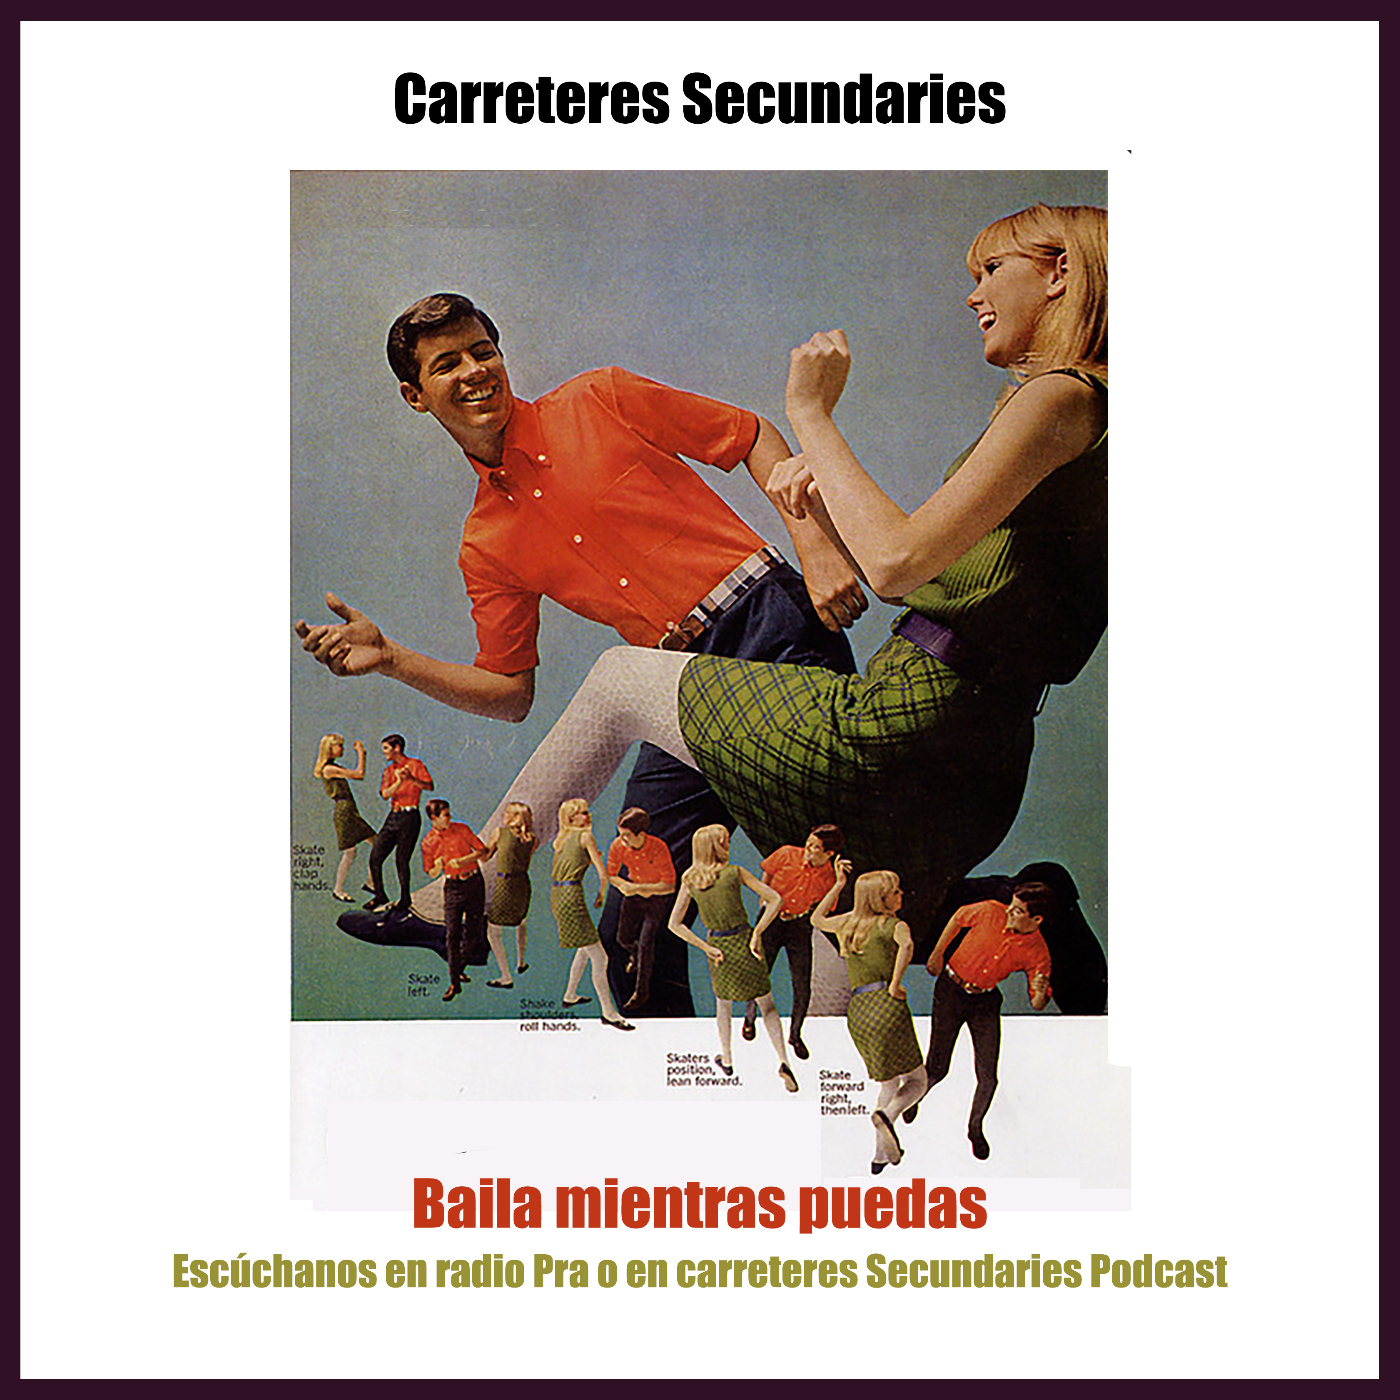 Carreteres Secundaries Podcast